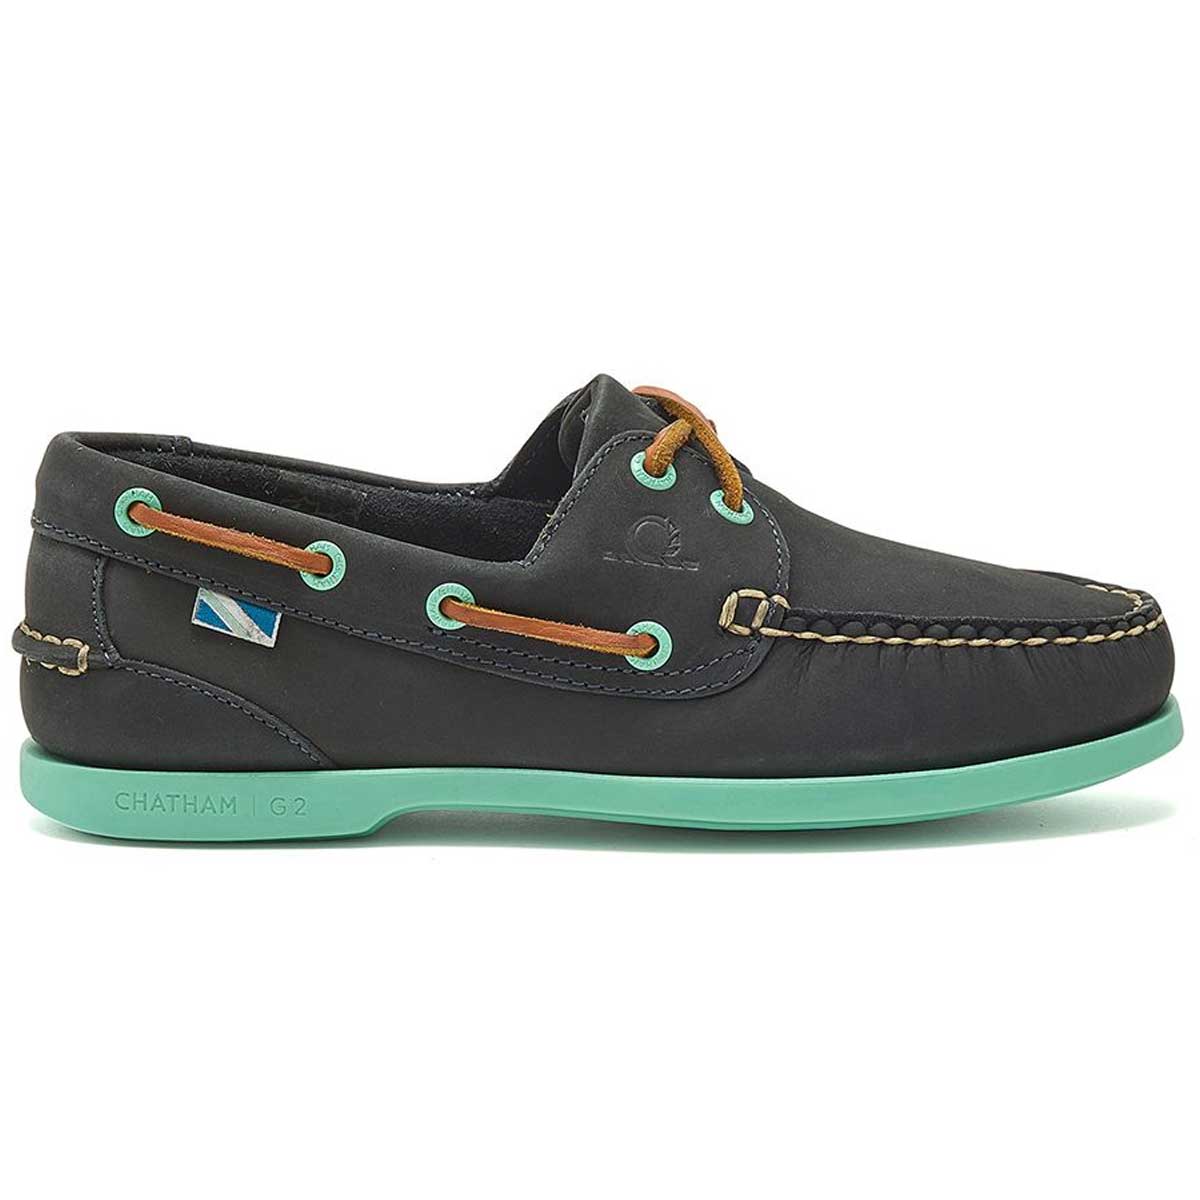 CHATHAM Pippa II G2 Leather Boat Shoes - Women's - Navy / Aqua